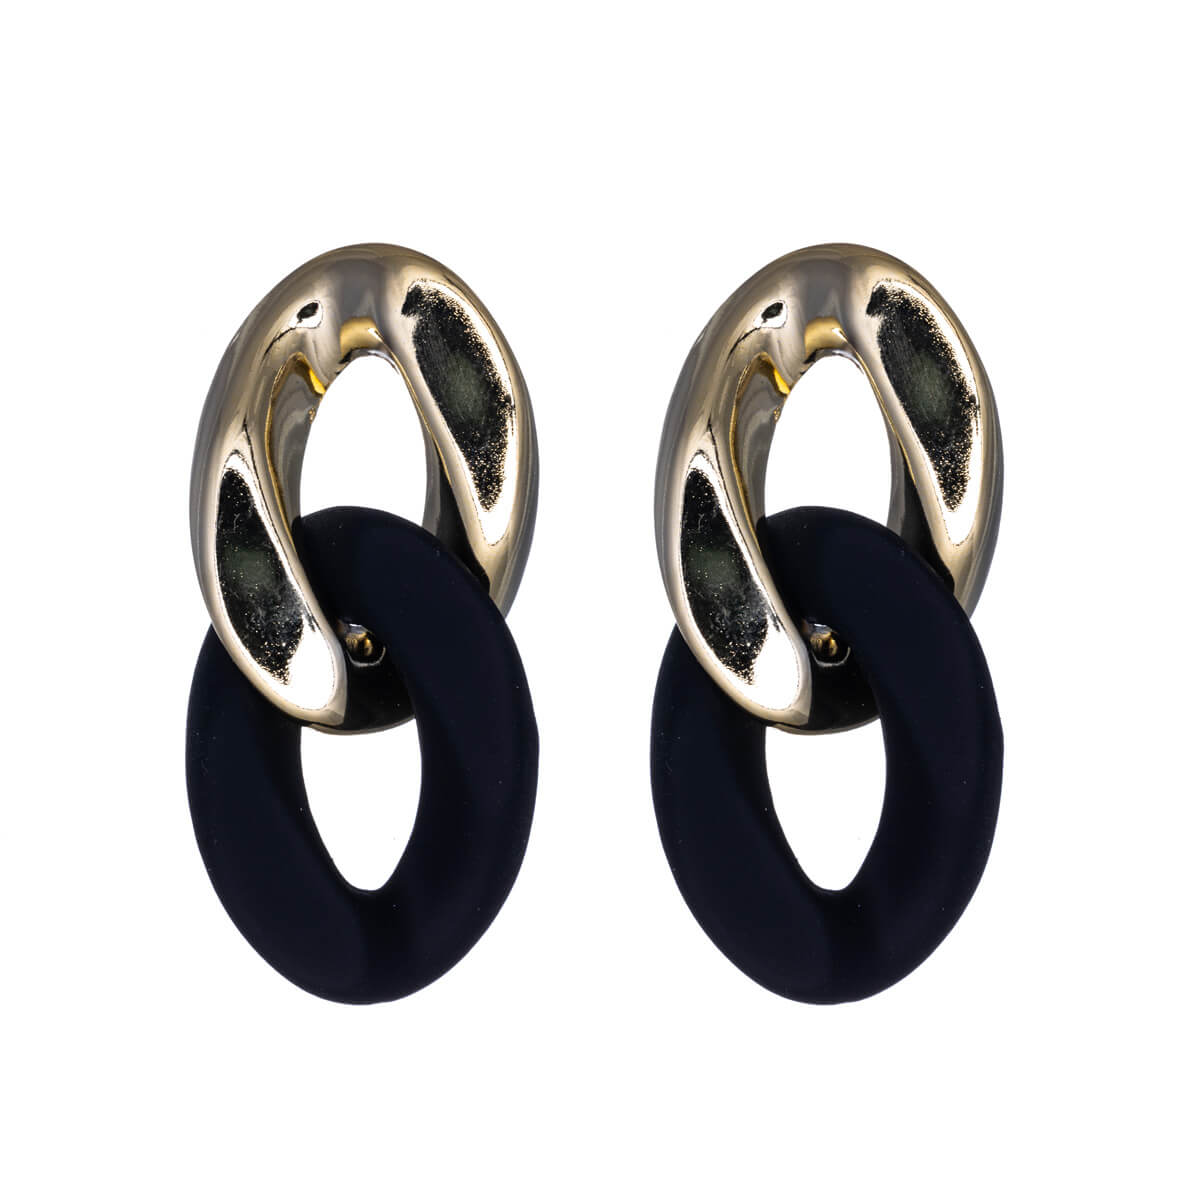 Chain earrings with big links